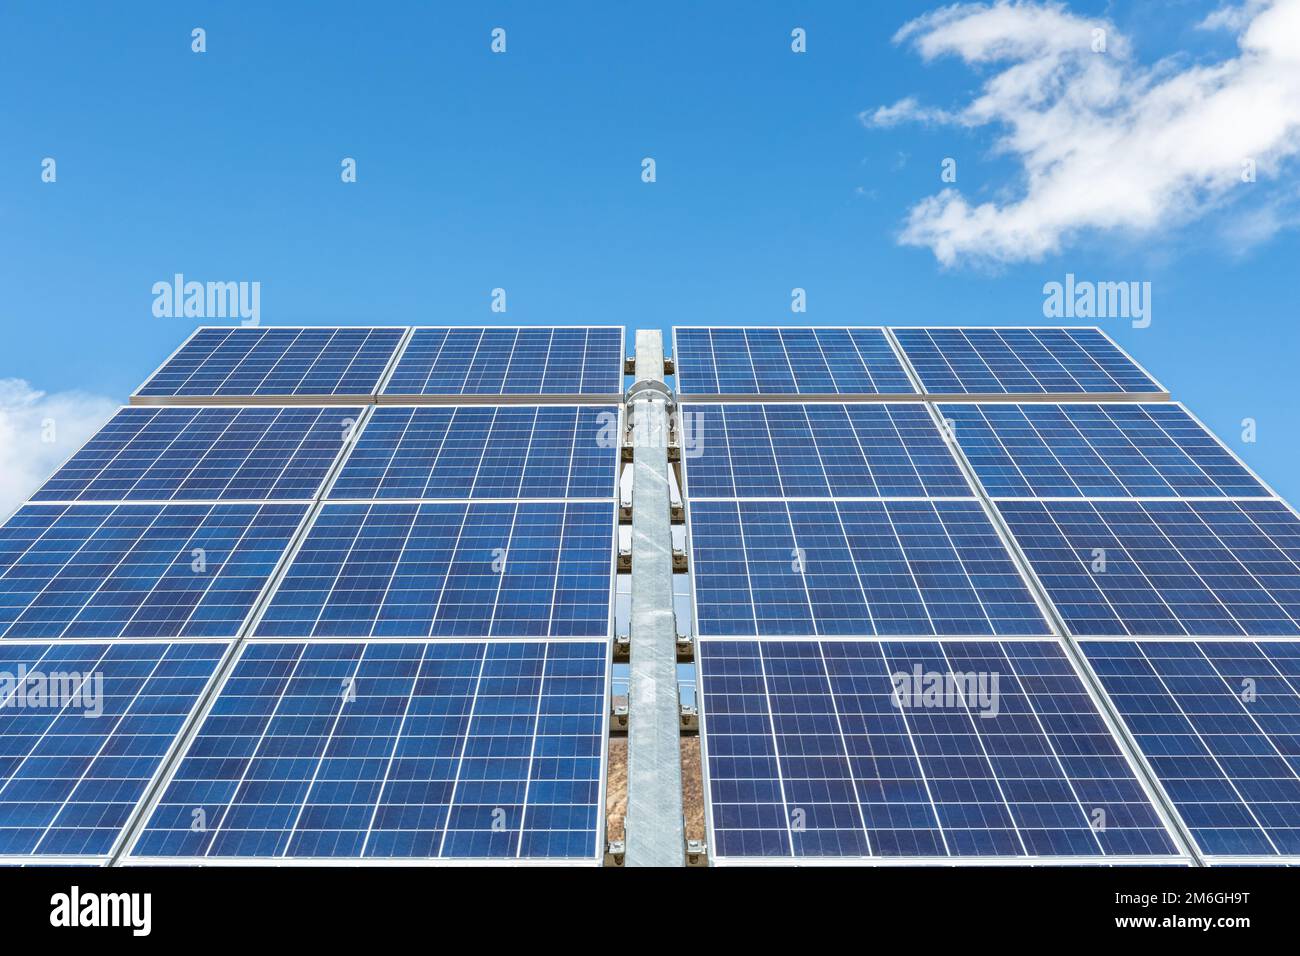 Solar panels against a blue sky Stock Photo